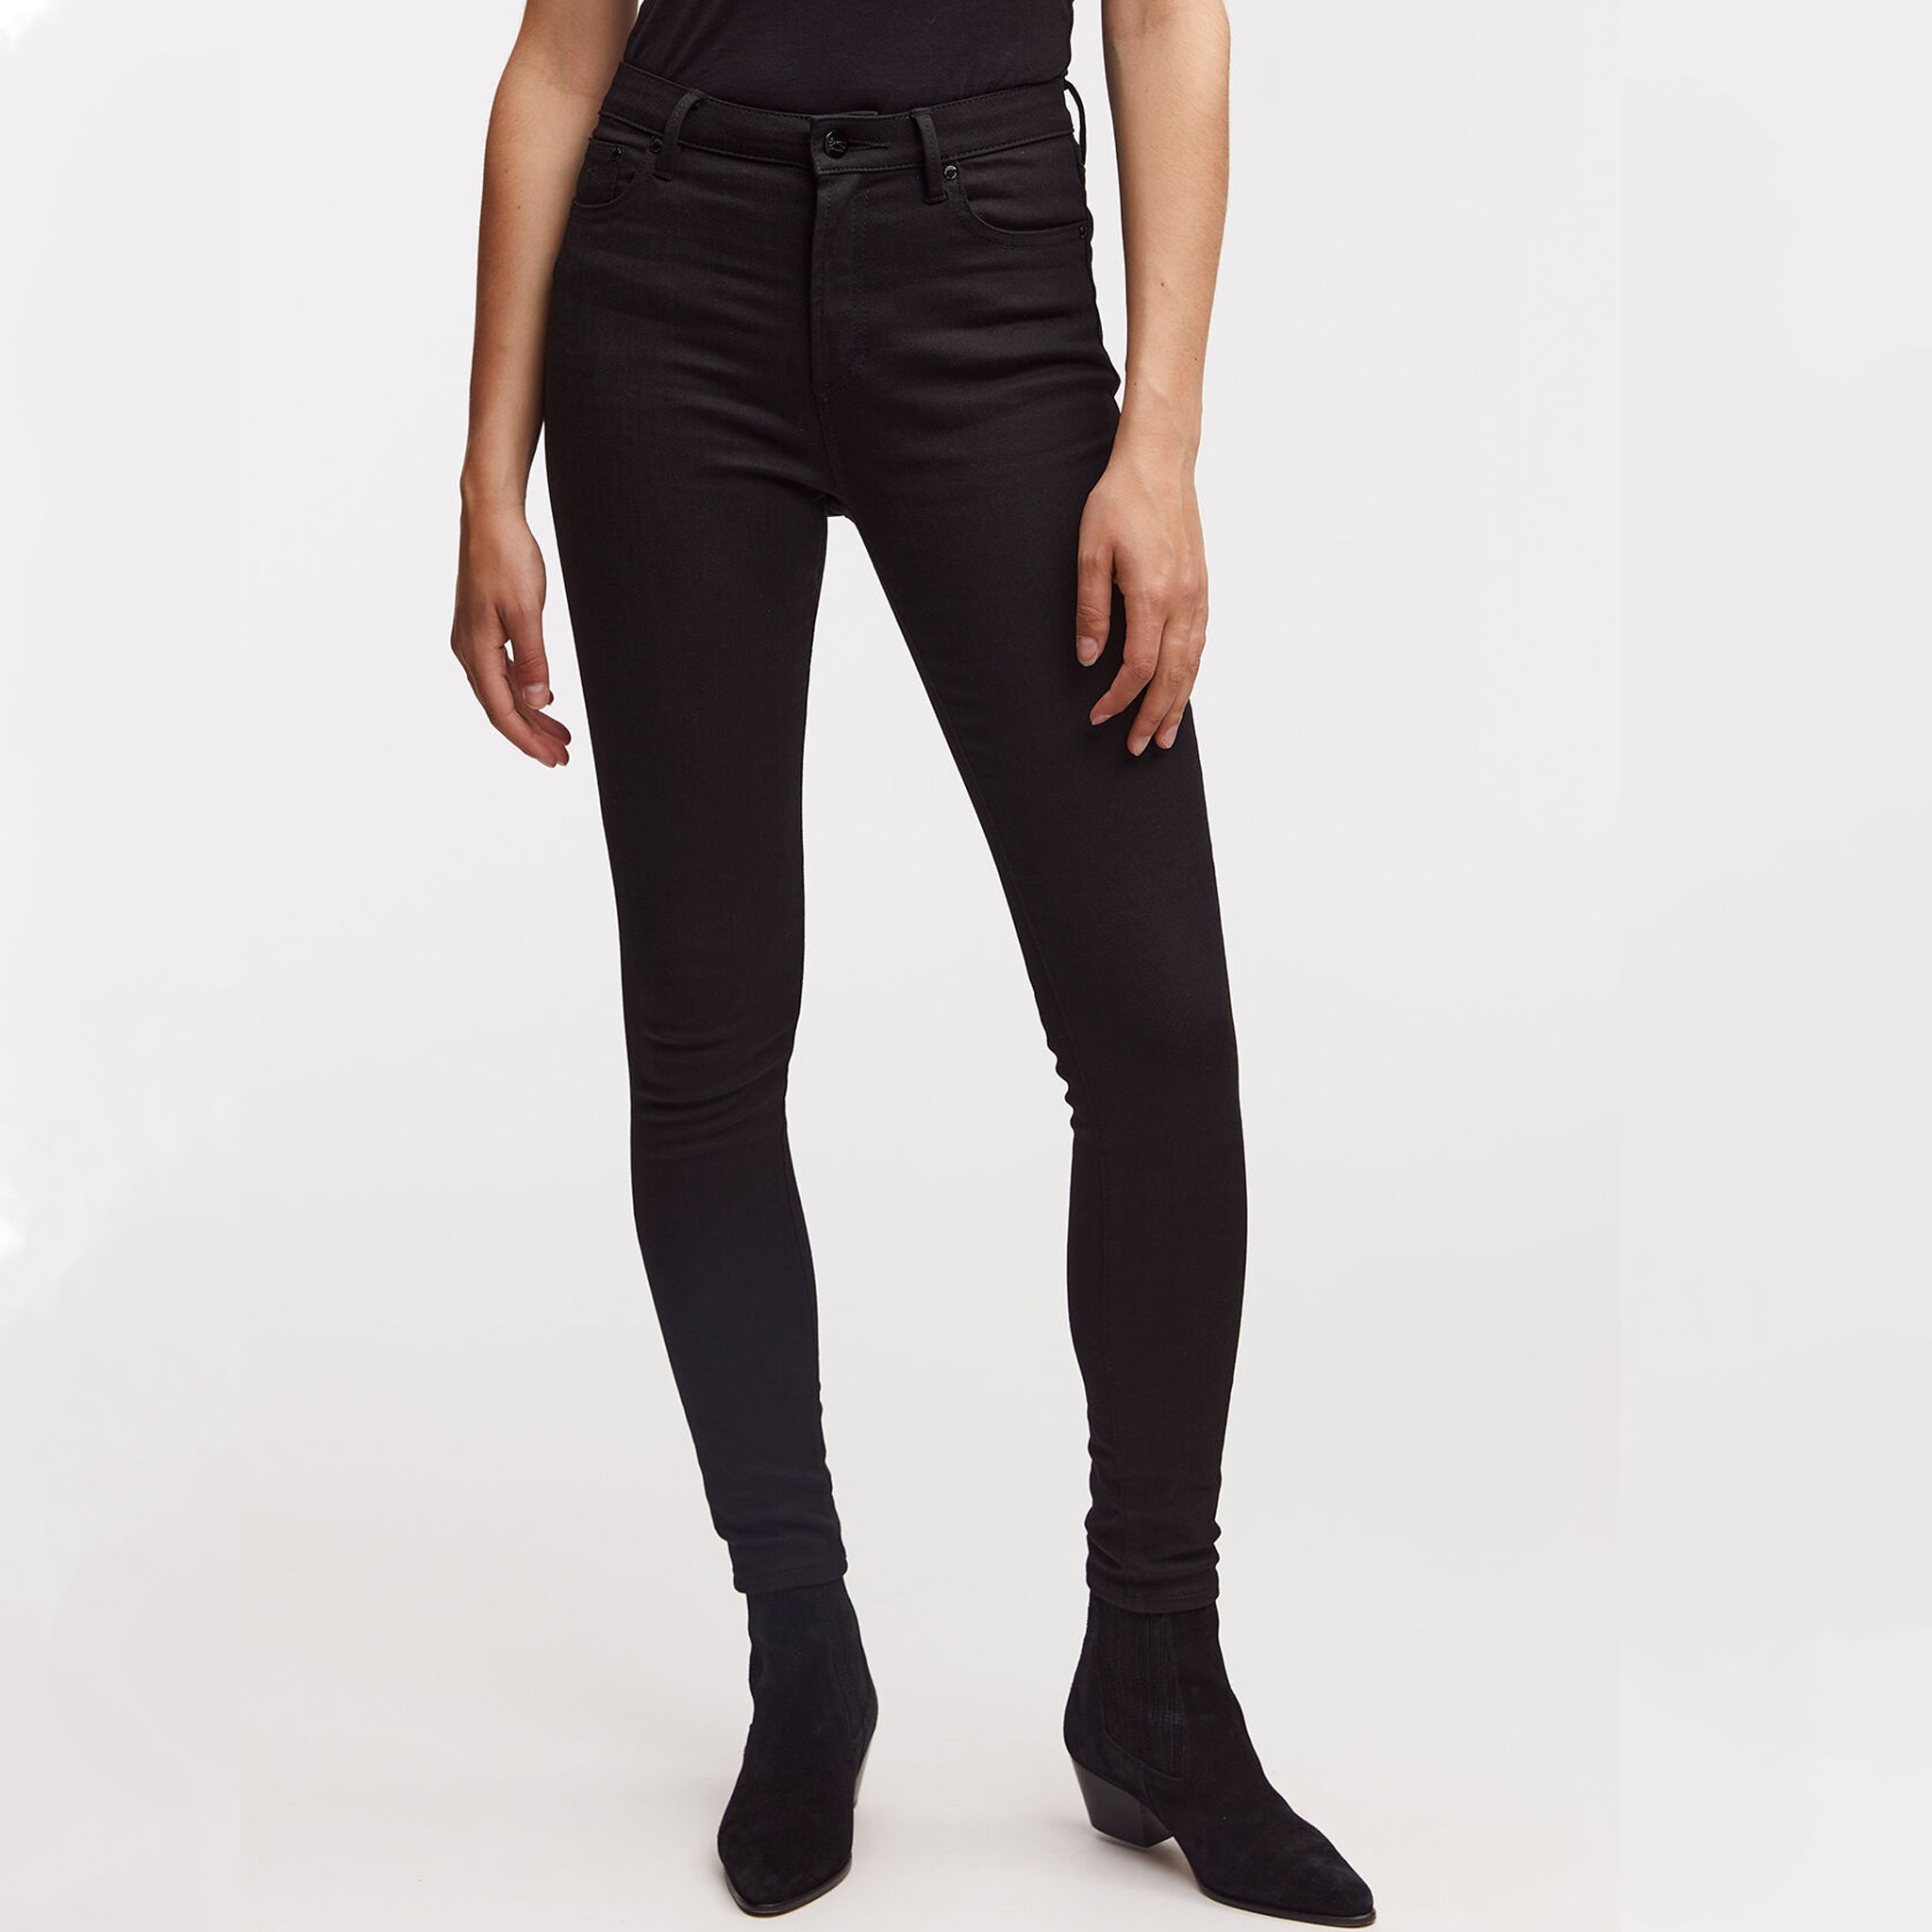 A woman wearing Denham's NEEDLE Skinny - True Black denim jeans.